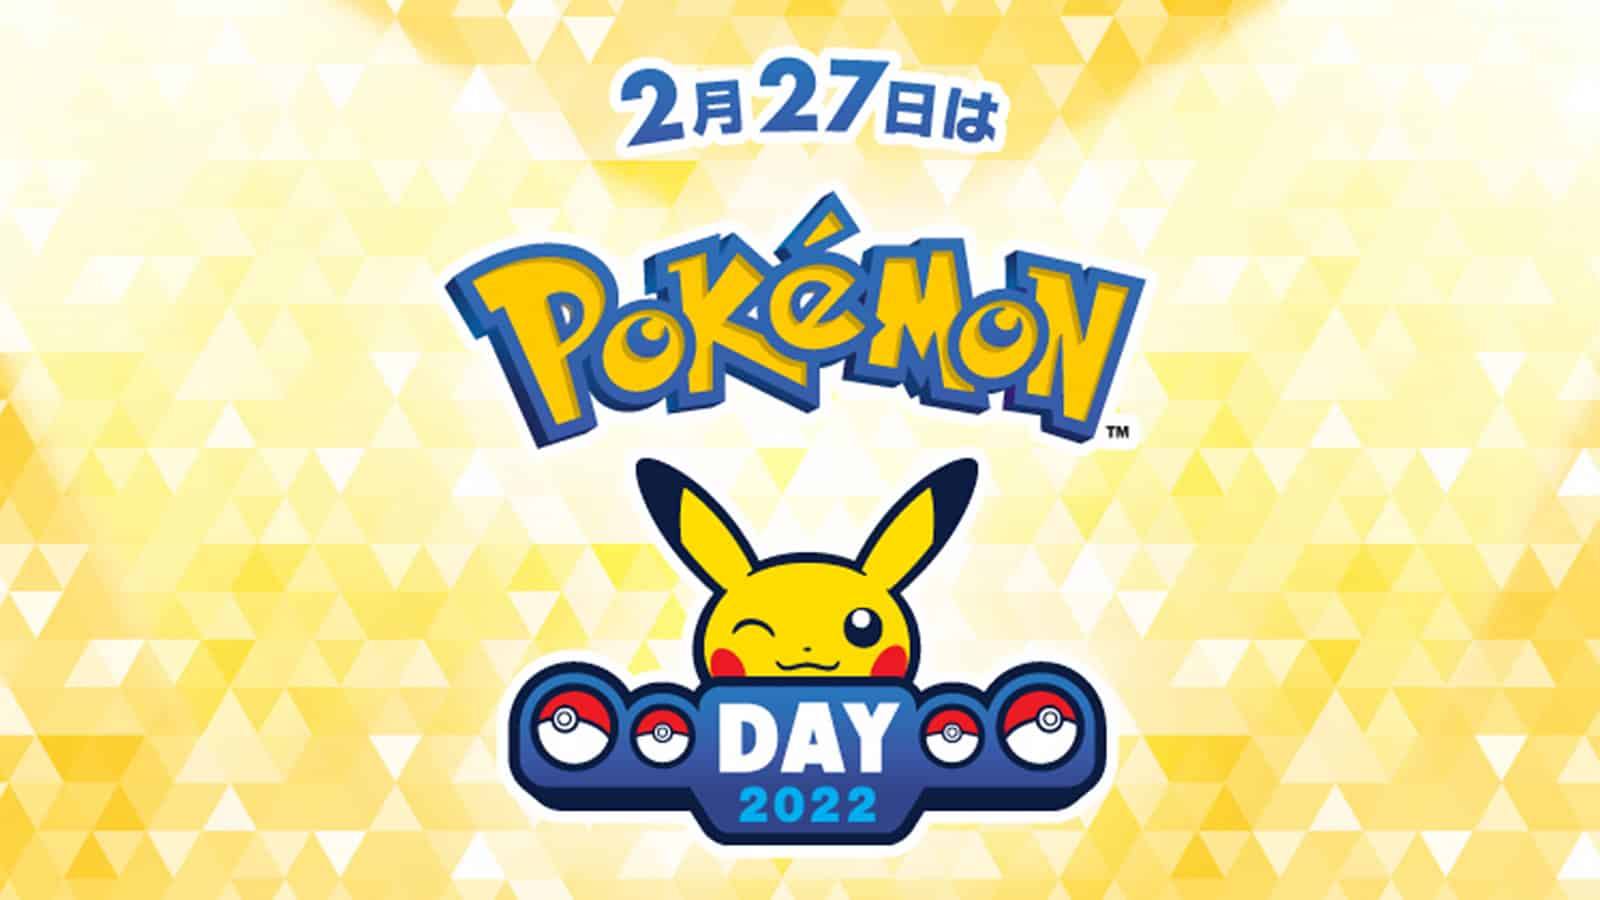 Pokemon Day 2022 announcement banner screenshot.